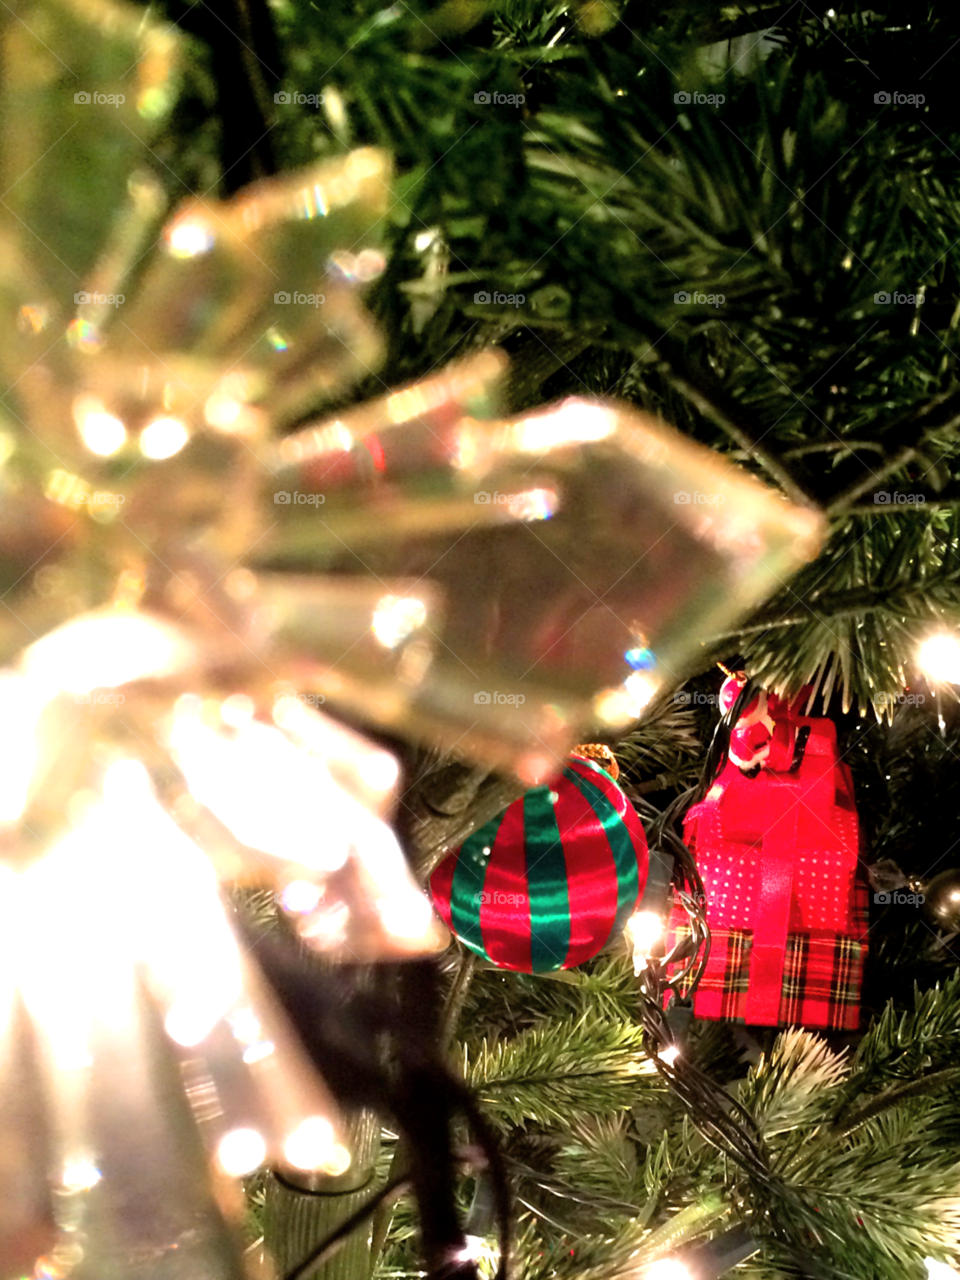 Hidden gems. Lovelies hidden in the Christmas tree. 🎄